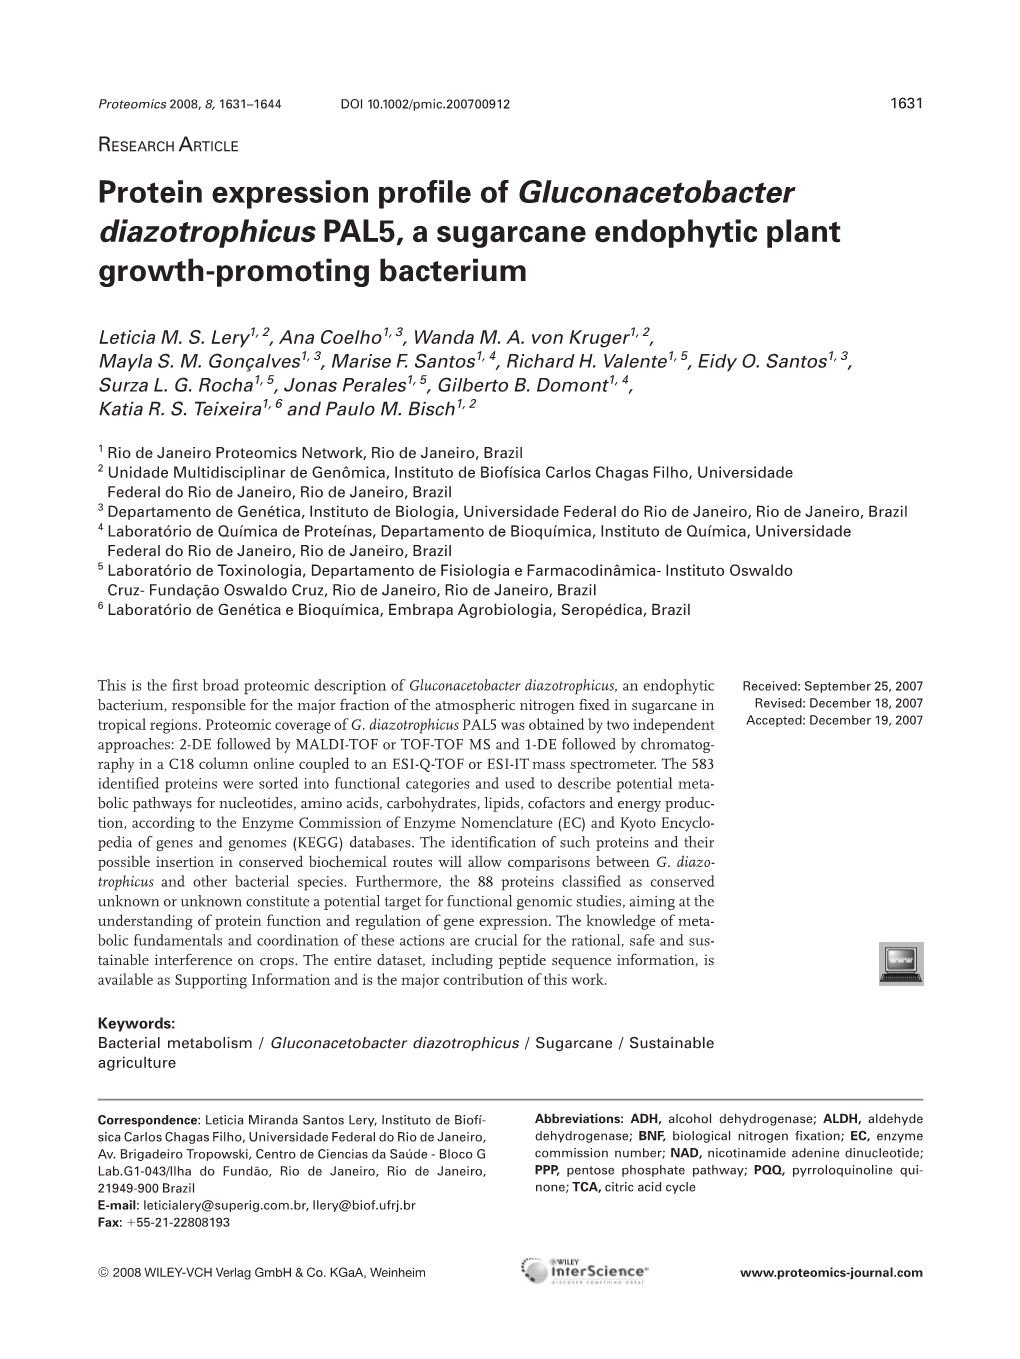 Protein Expression Profile of Gluconacetobacter Diazotrophicus PAL5, a Sugarcane Endophytic Plant Growth-Promoting Bacterium